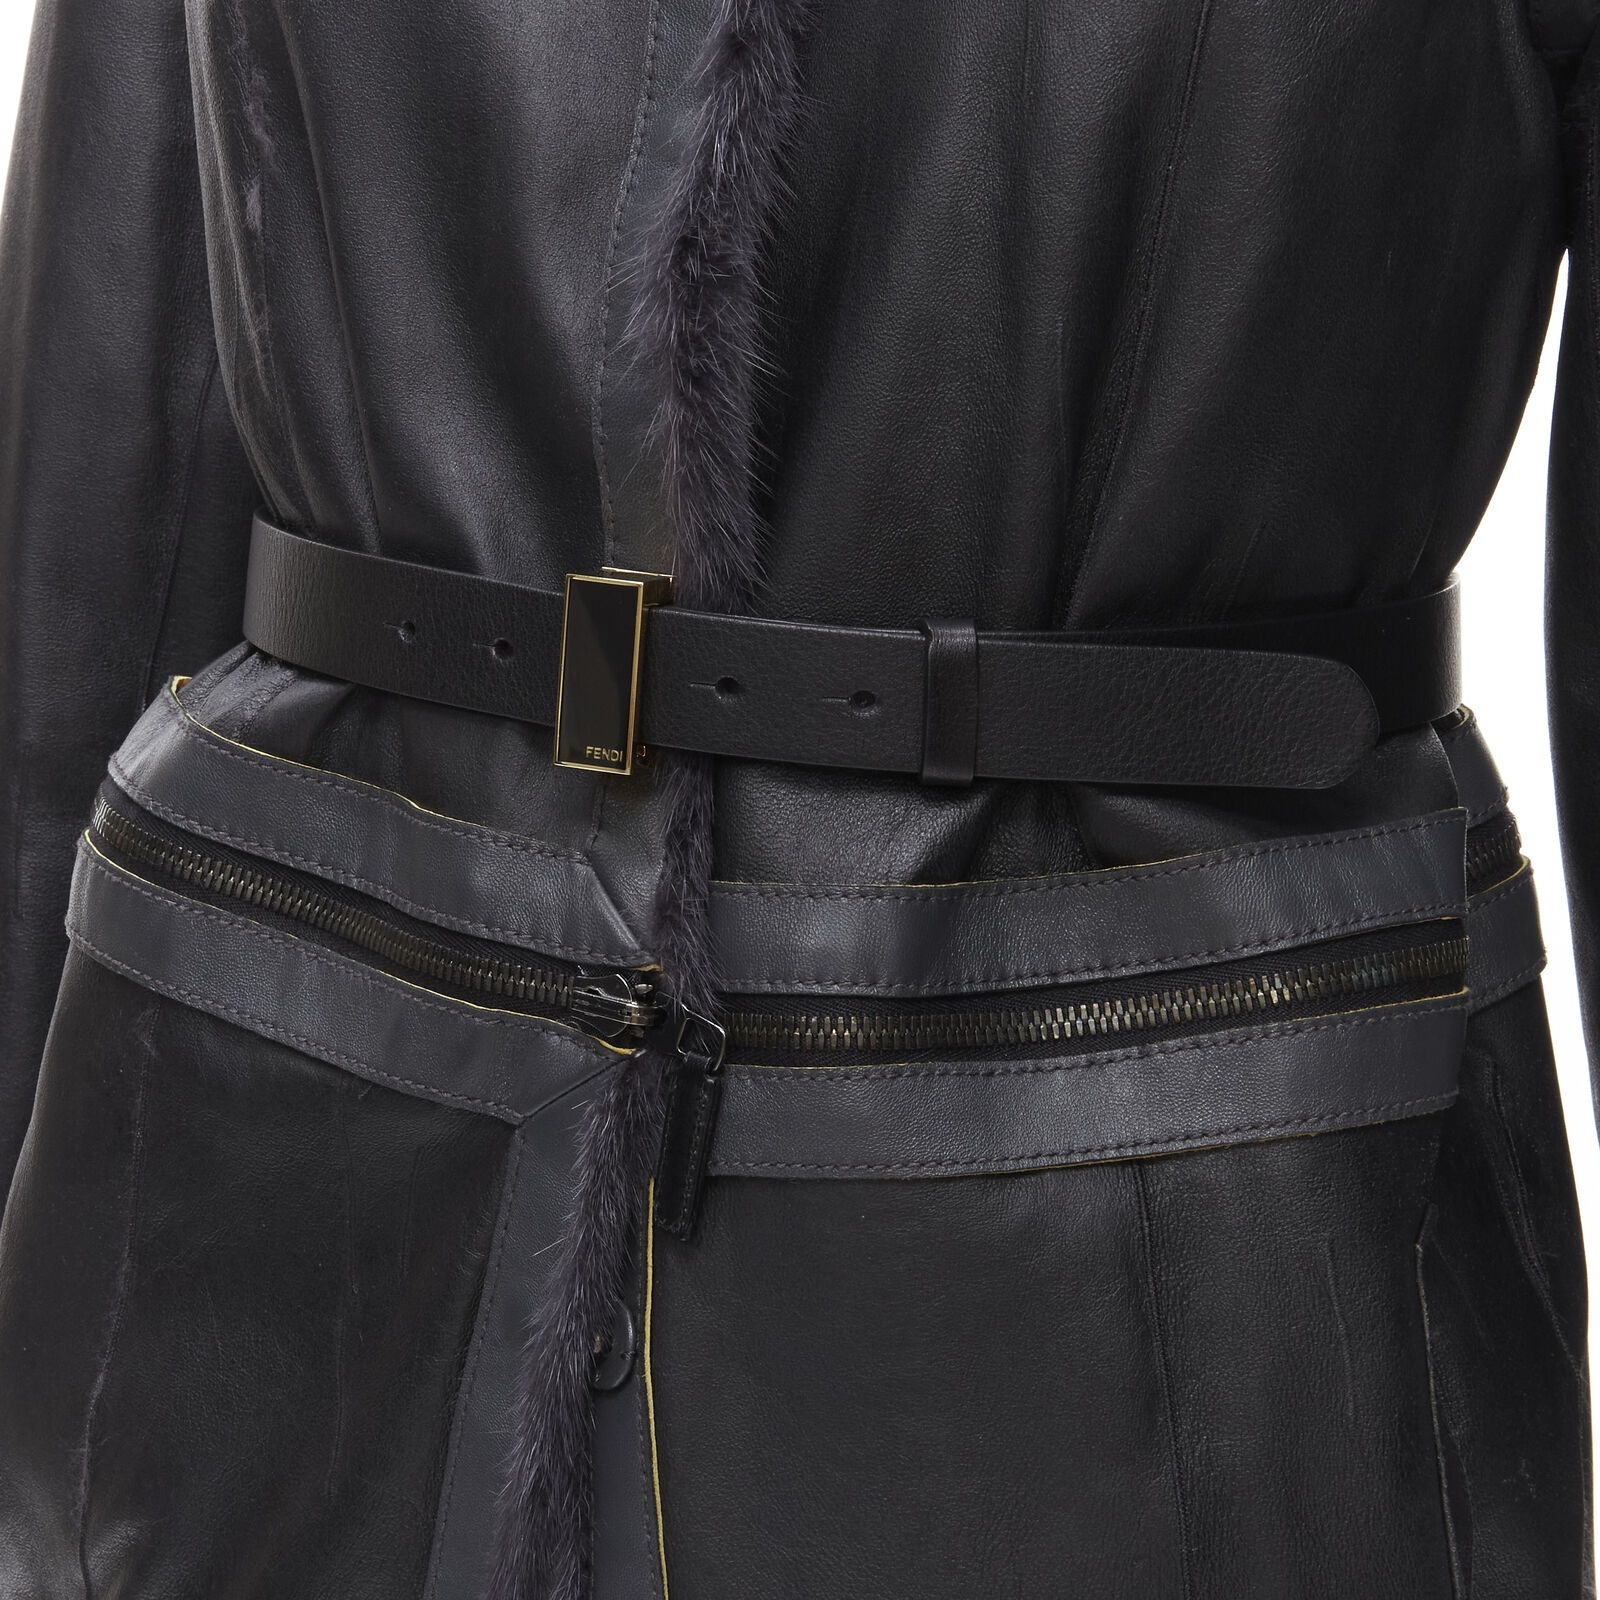 Fendi FENDI grey black fur leather 4-way reversible zip belted coat jacket IT38 Size XS / US 0-2 / IT 36-38 - 10 Thumbnail